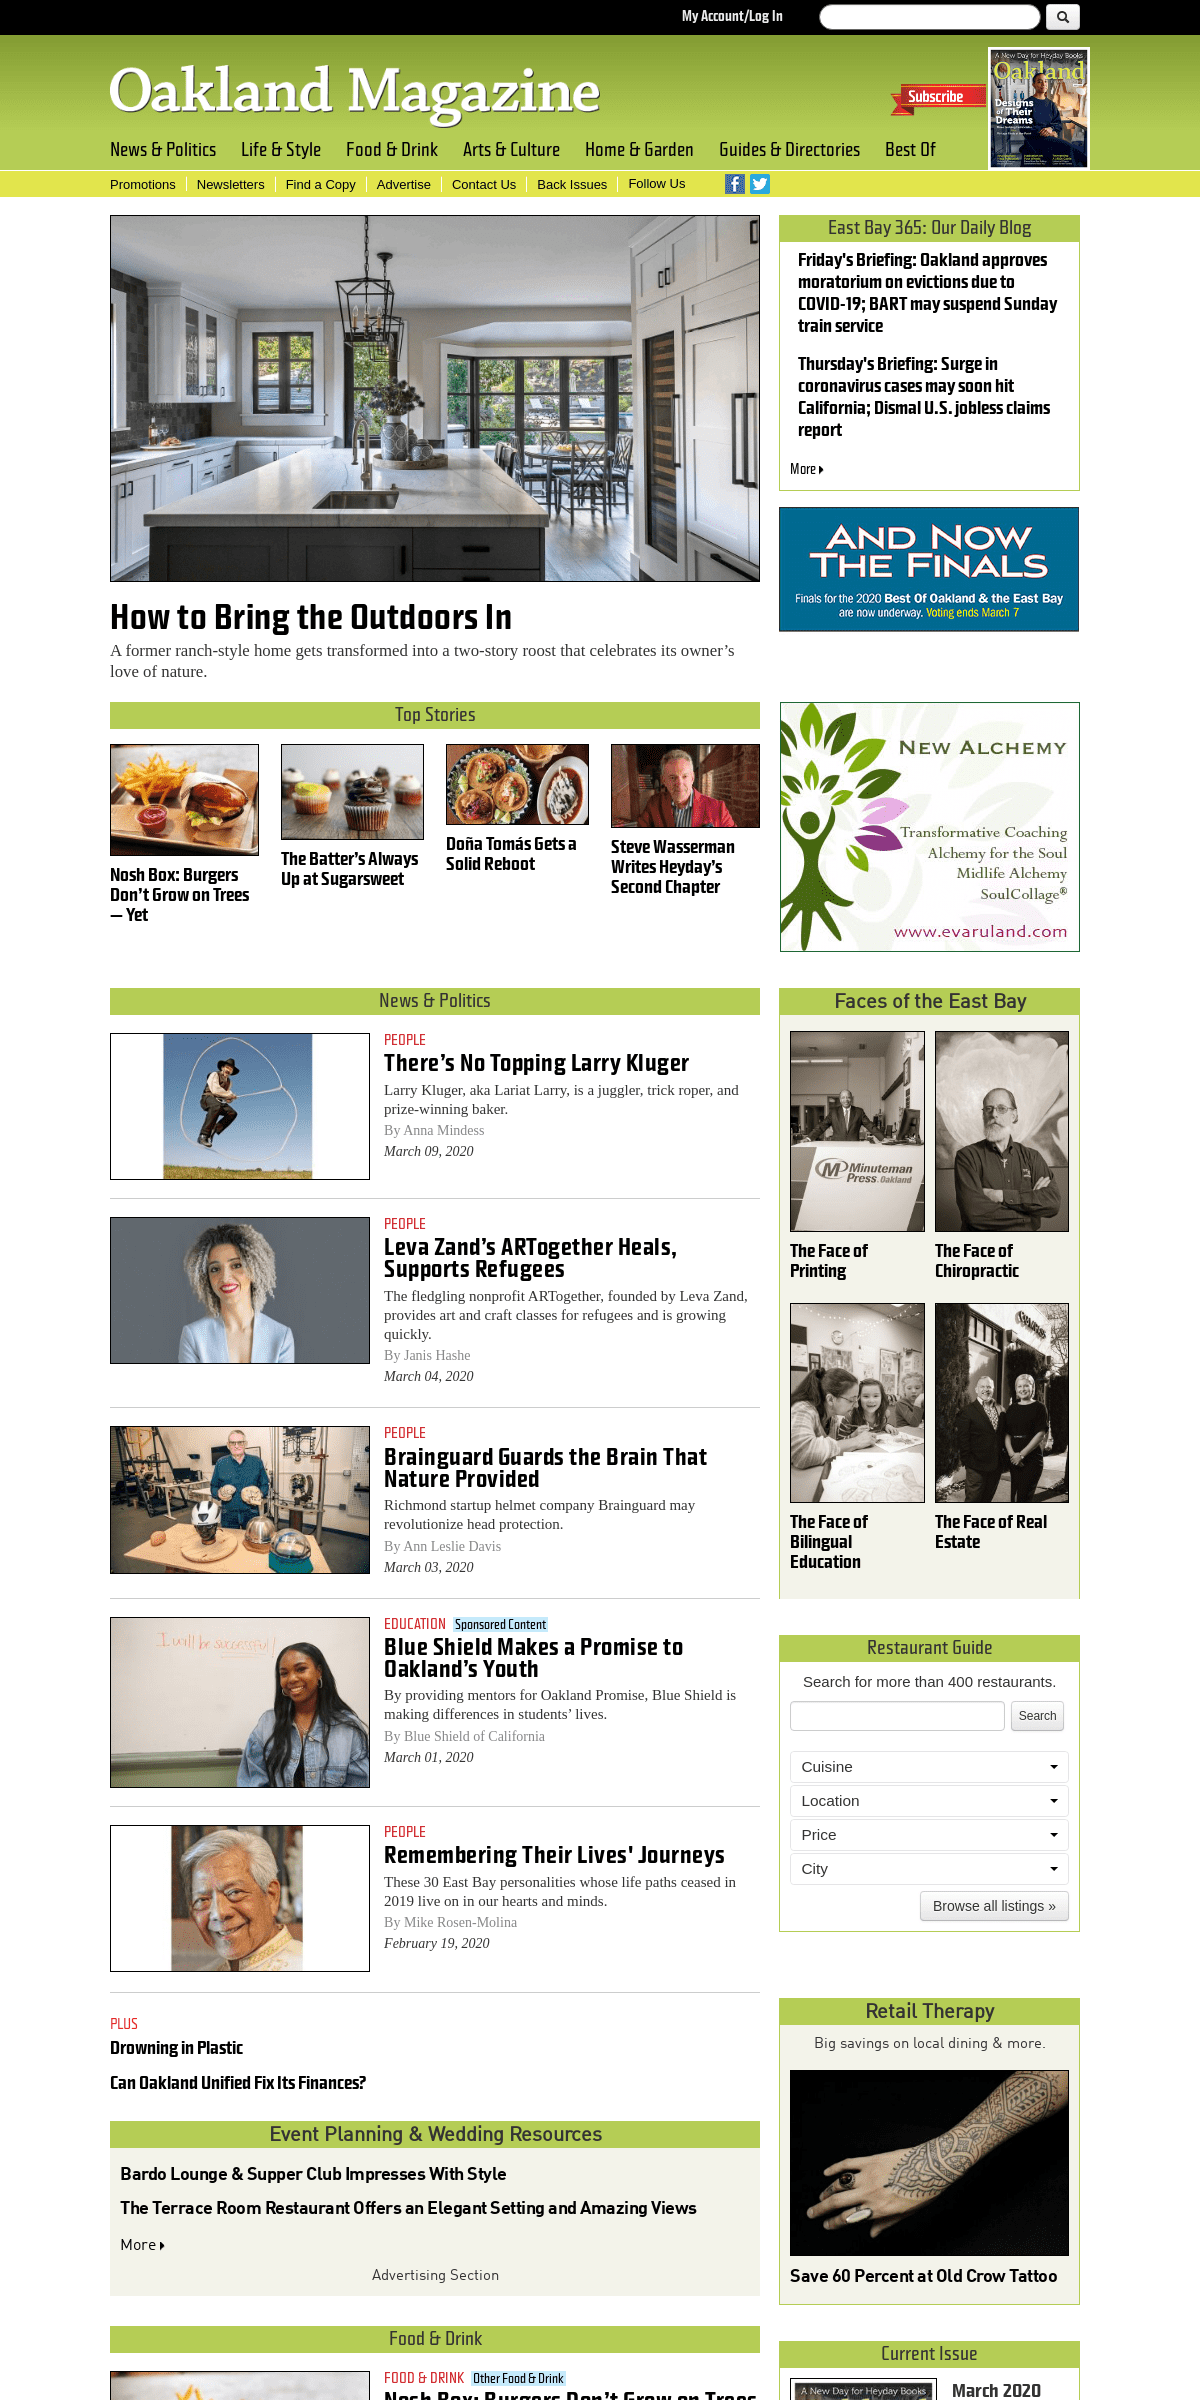 A complete backup of oaklandmagazine.com